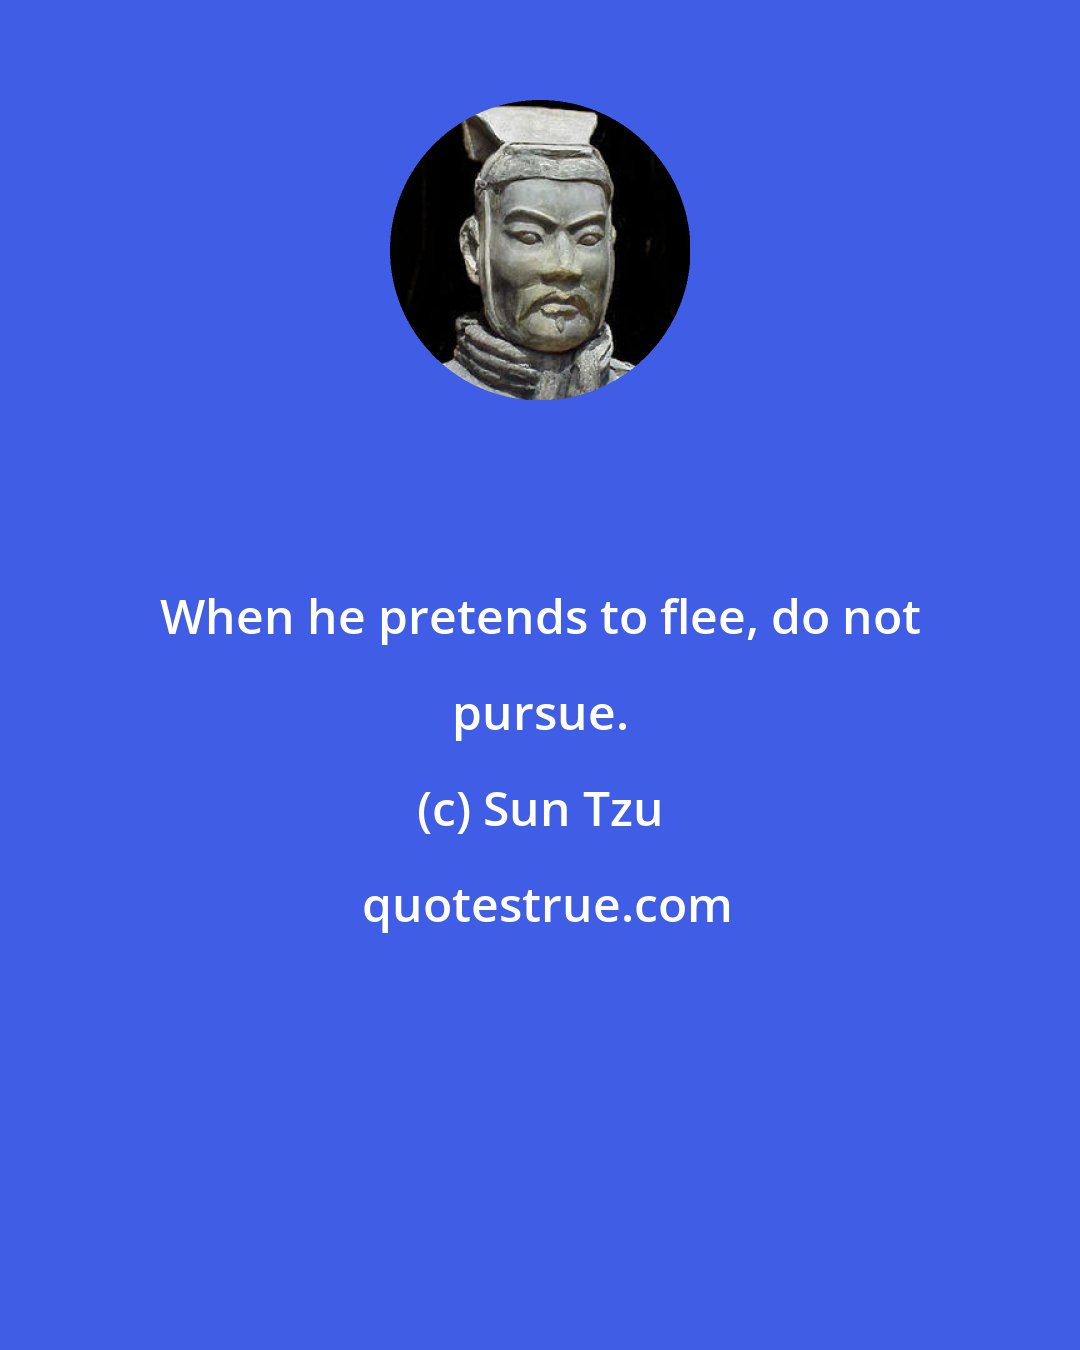 Sun Tzu: When he pretends to flee, do not pursue.